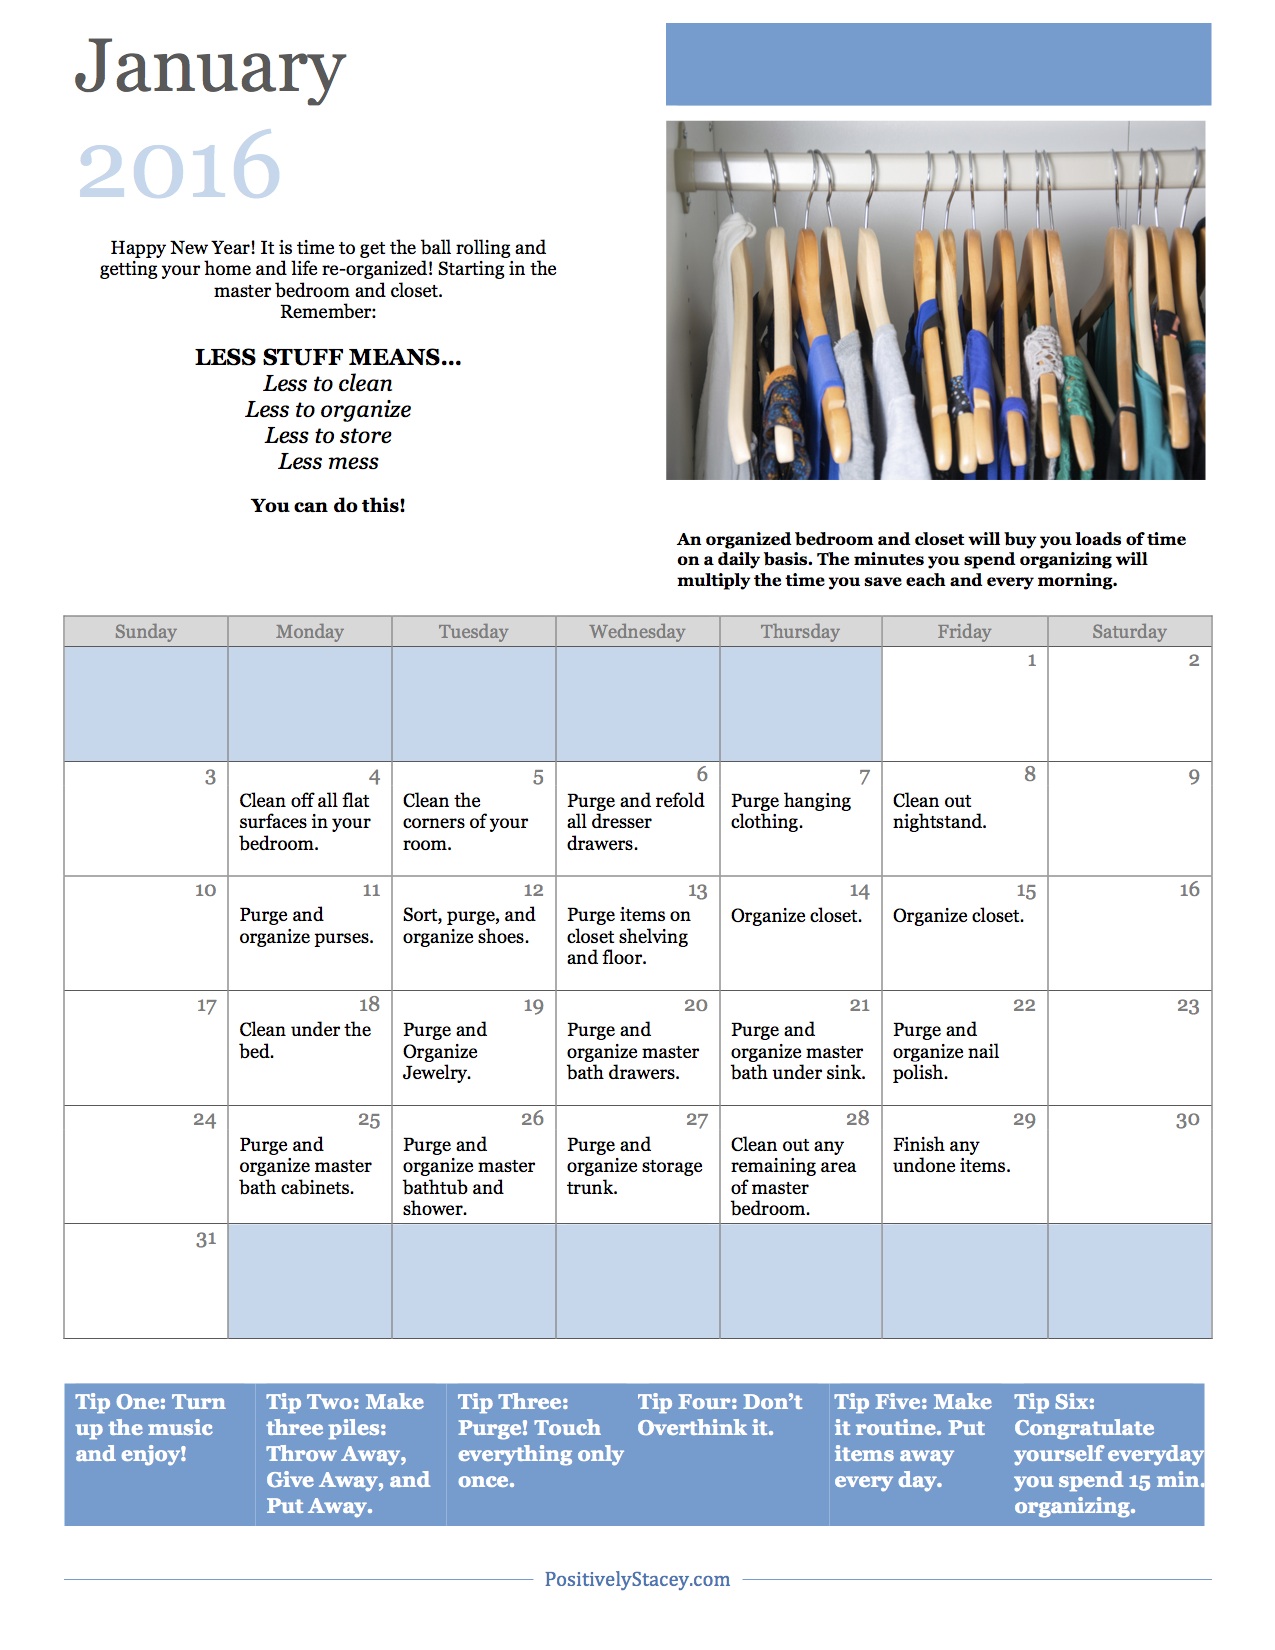 January 2016 Organization Calendar copy